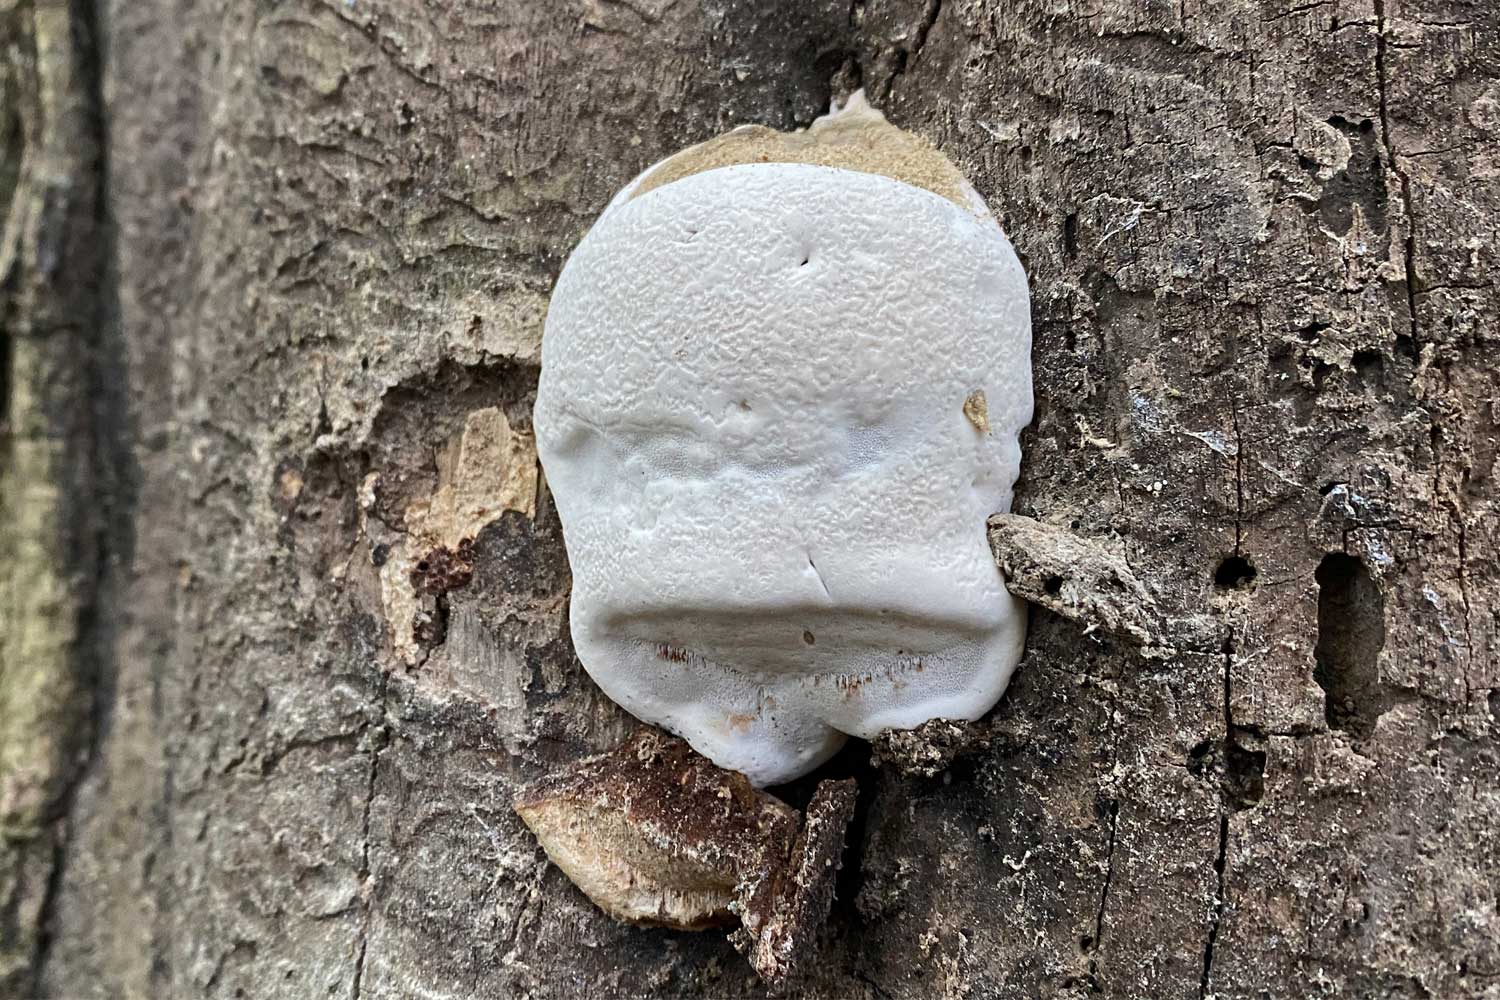 Artists bracket fungus on a tree.